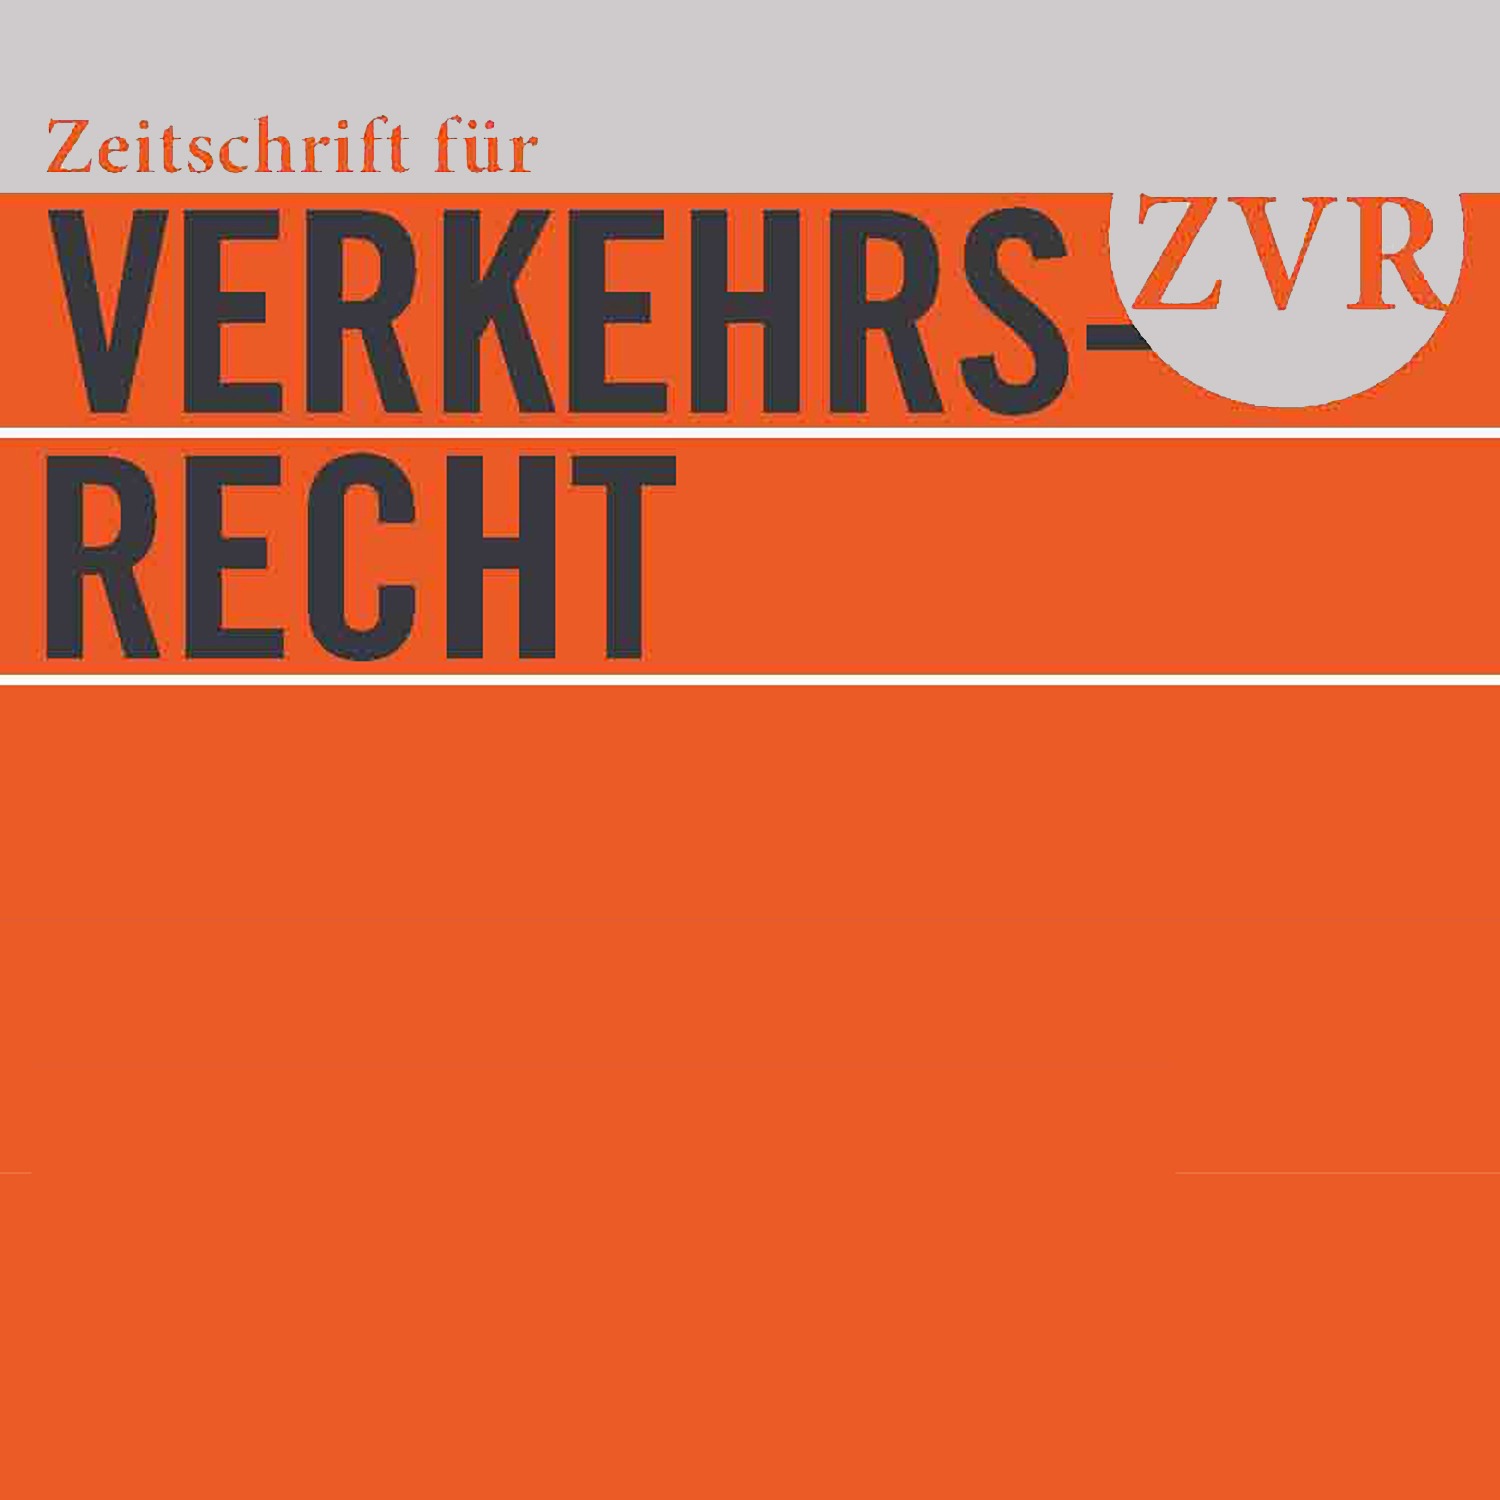 Just published – Digitalisierung des Straßenverkehrsrechts